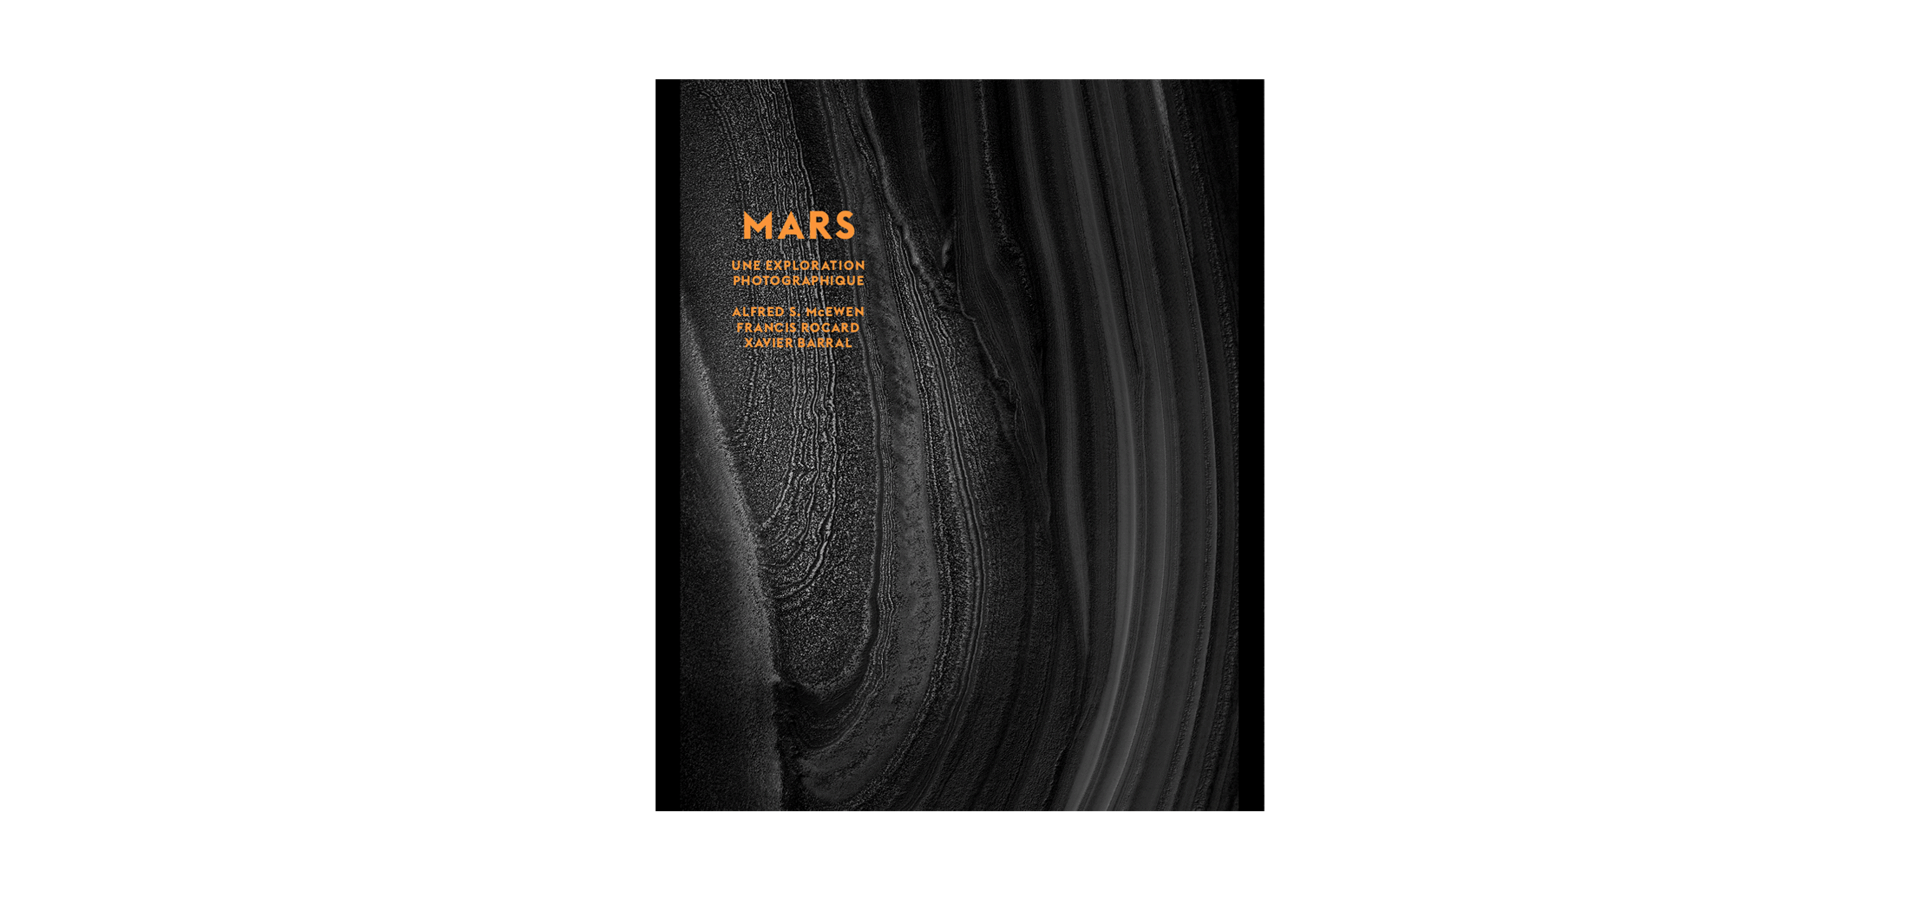 MARS, a photographic exploration